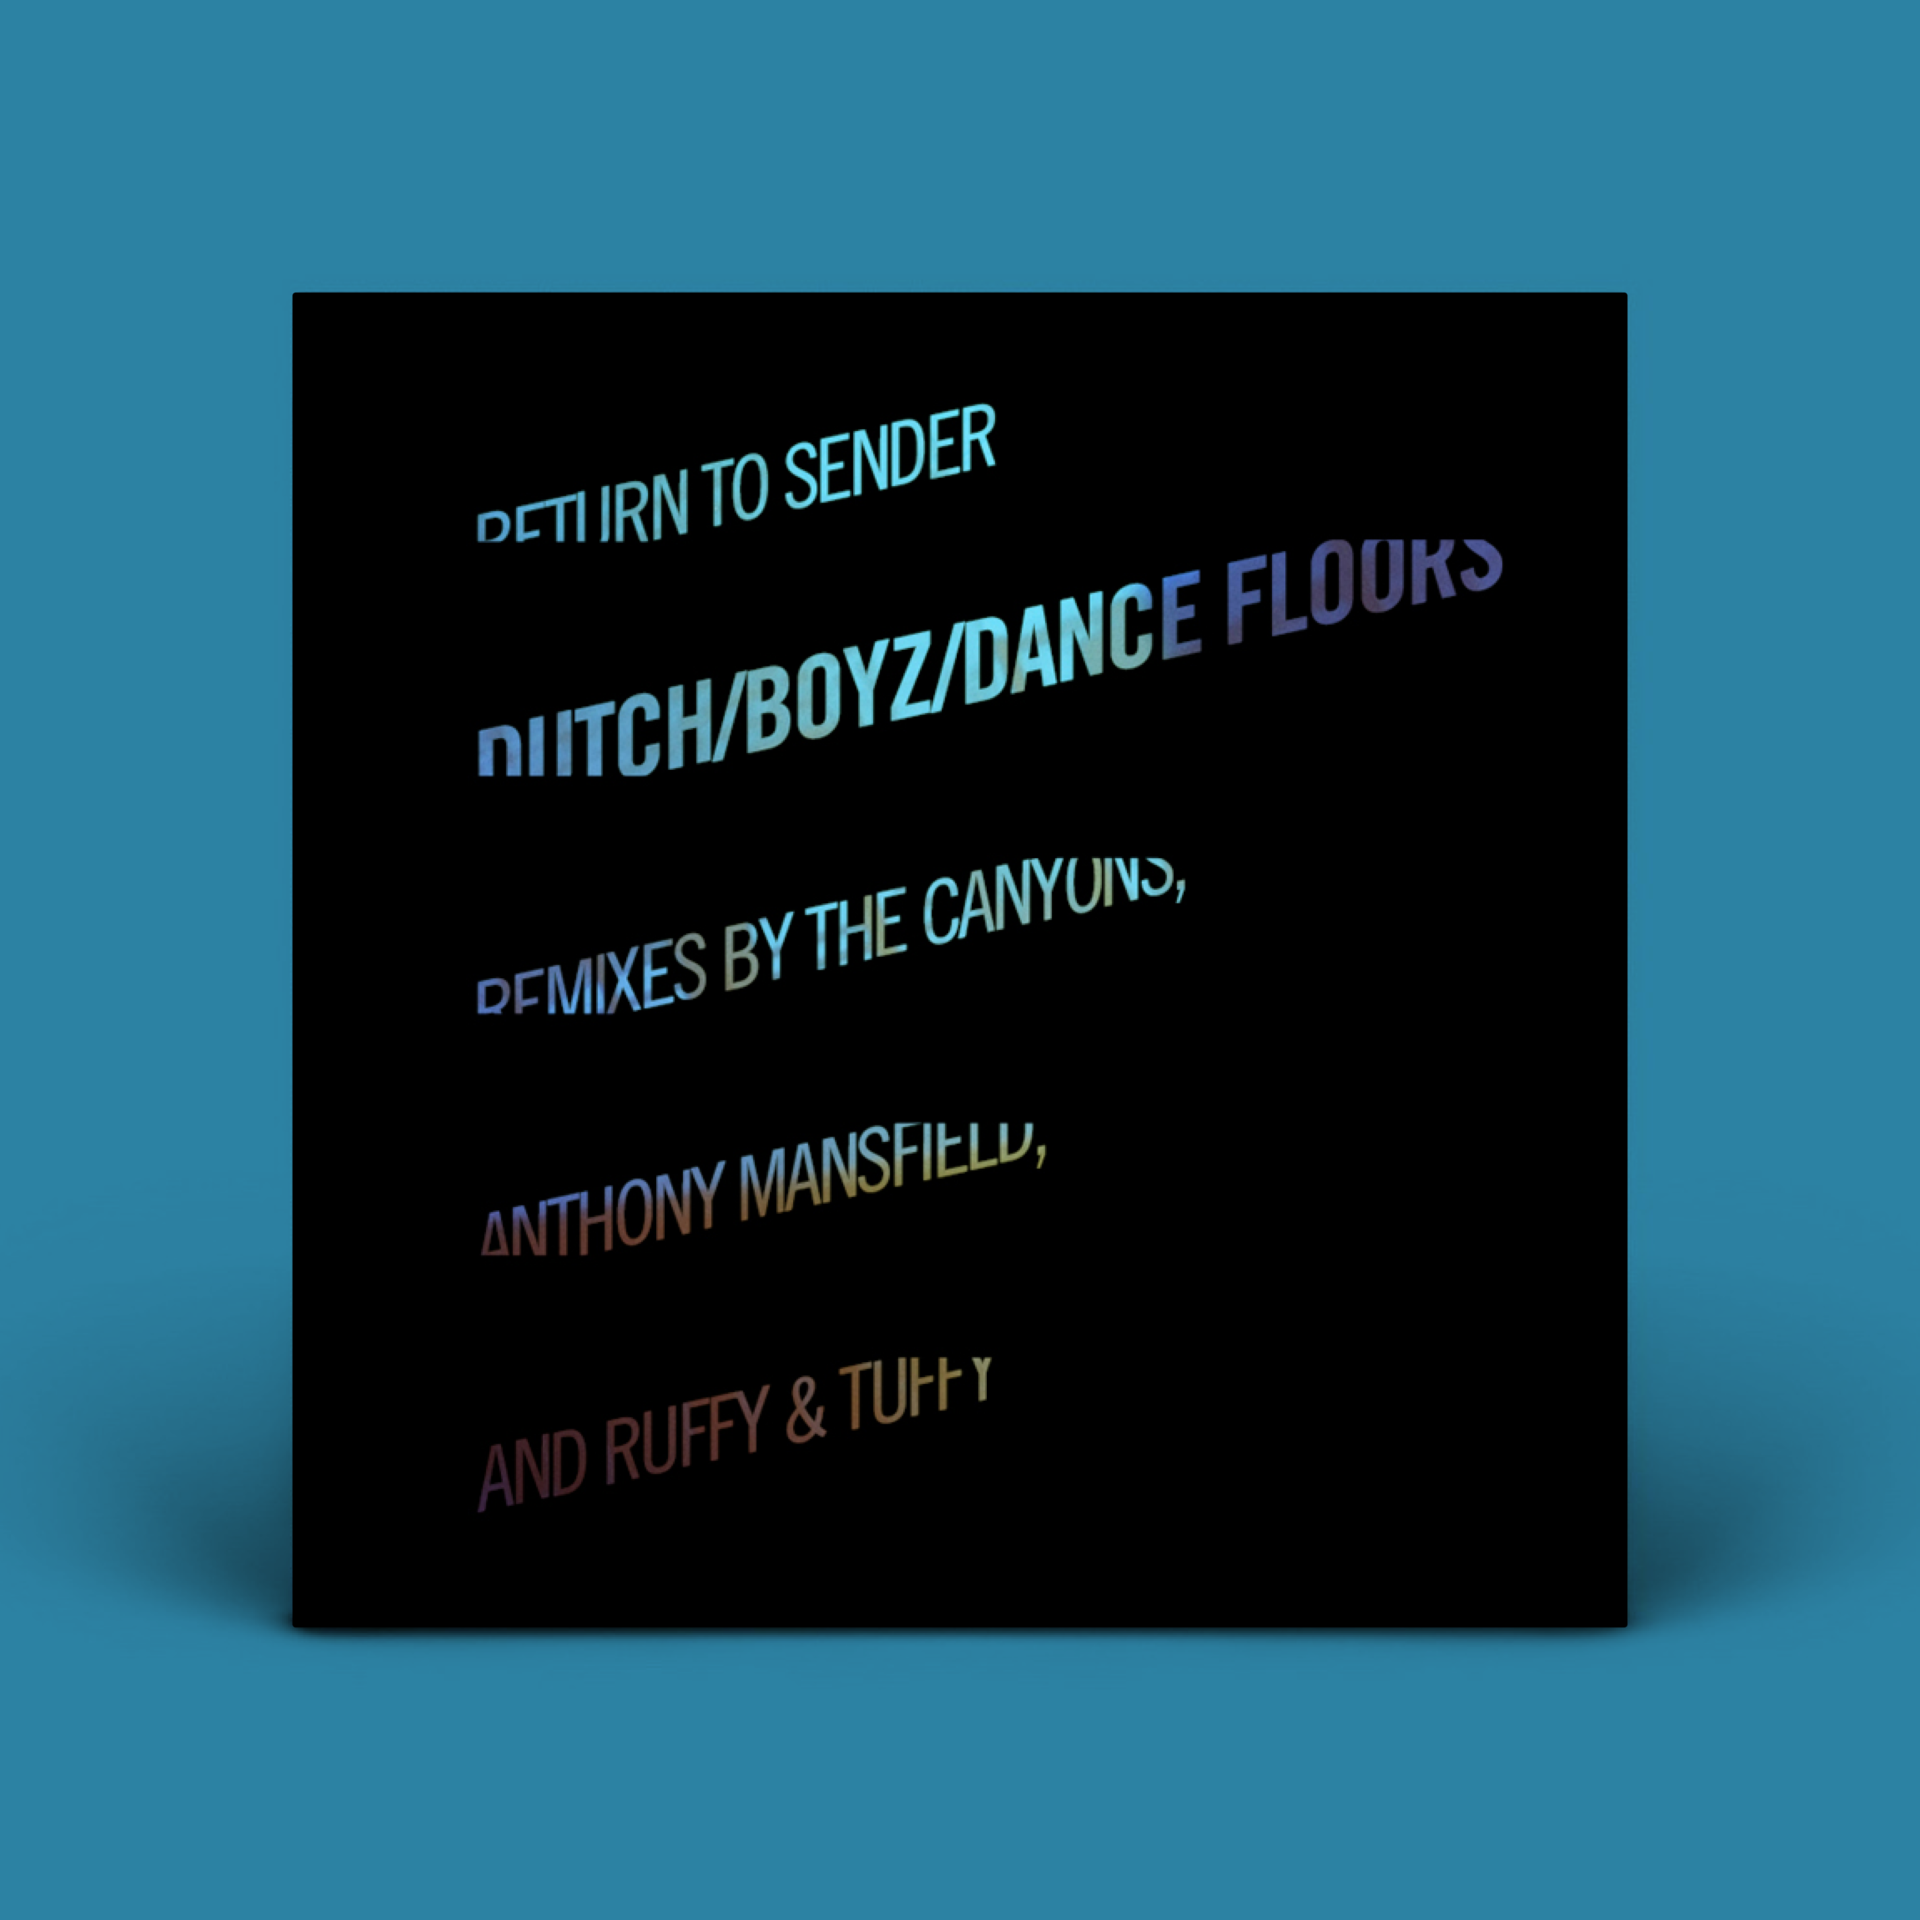 Dutch/Boyz/Dancefloor - Return to Sender